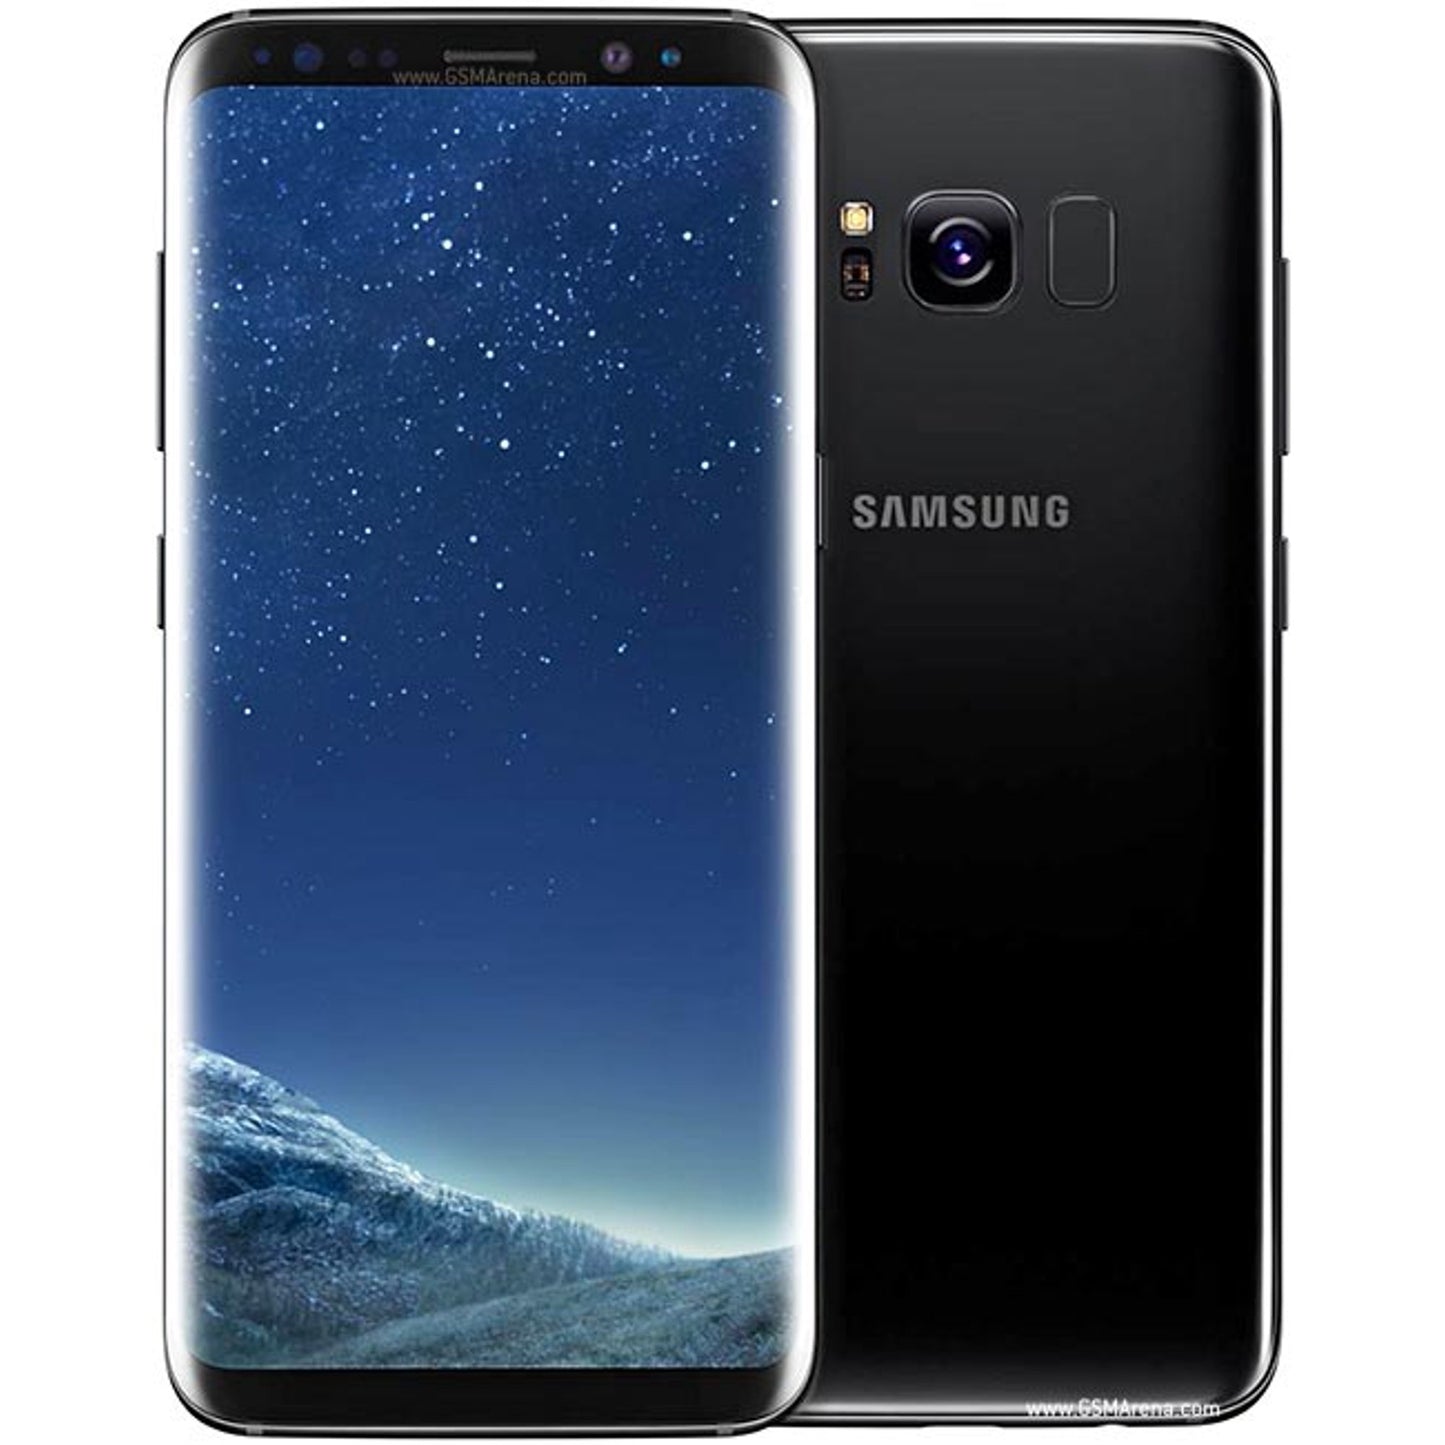 Samsung Galaxy S8 Plus - 64GB - UNLOCKED